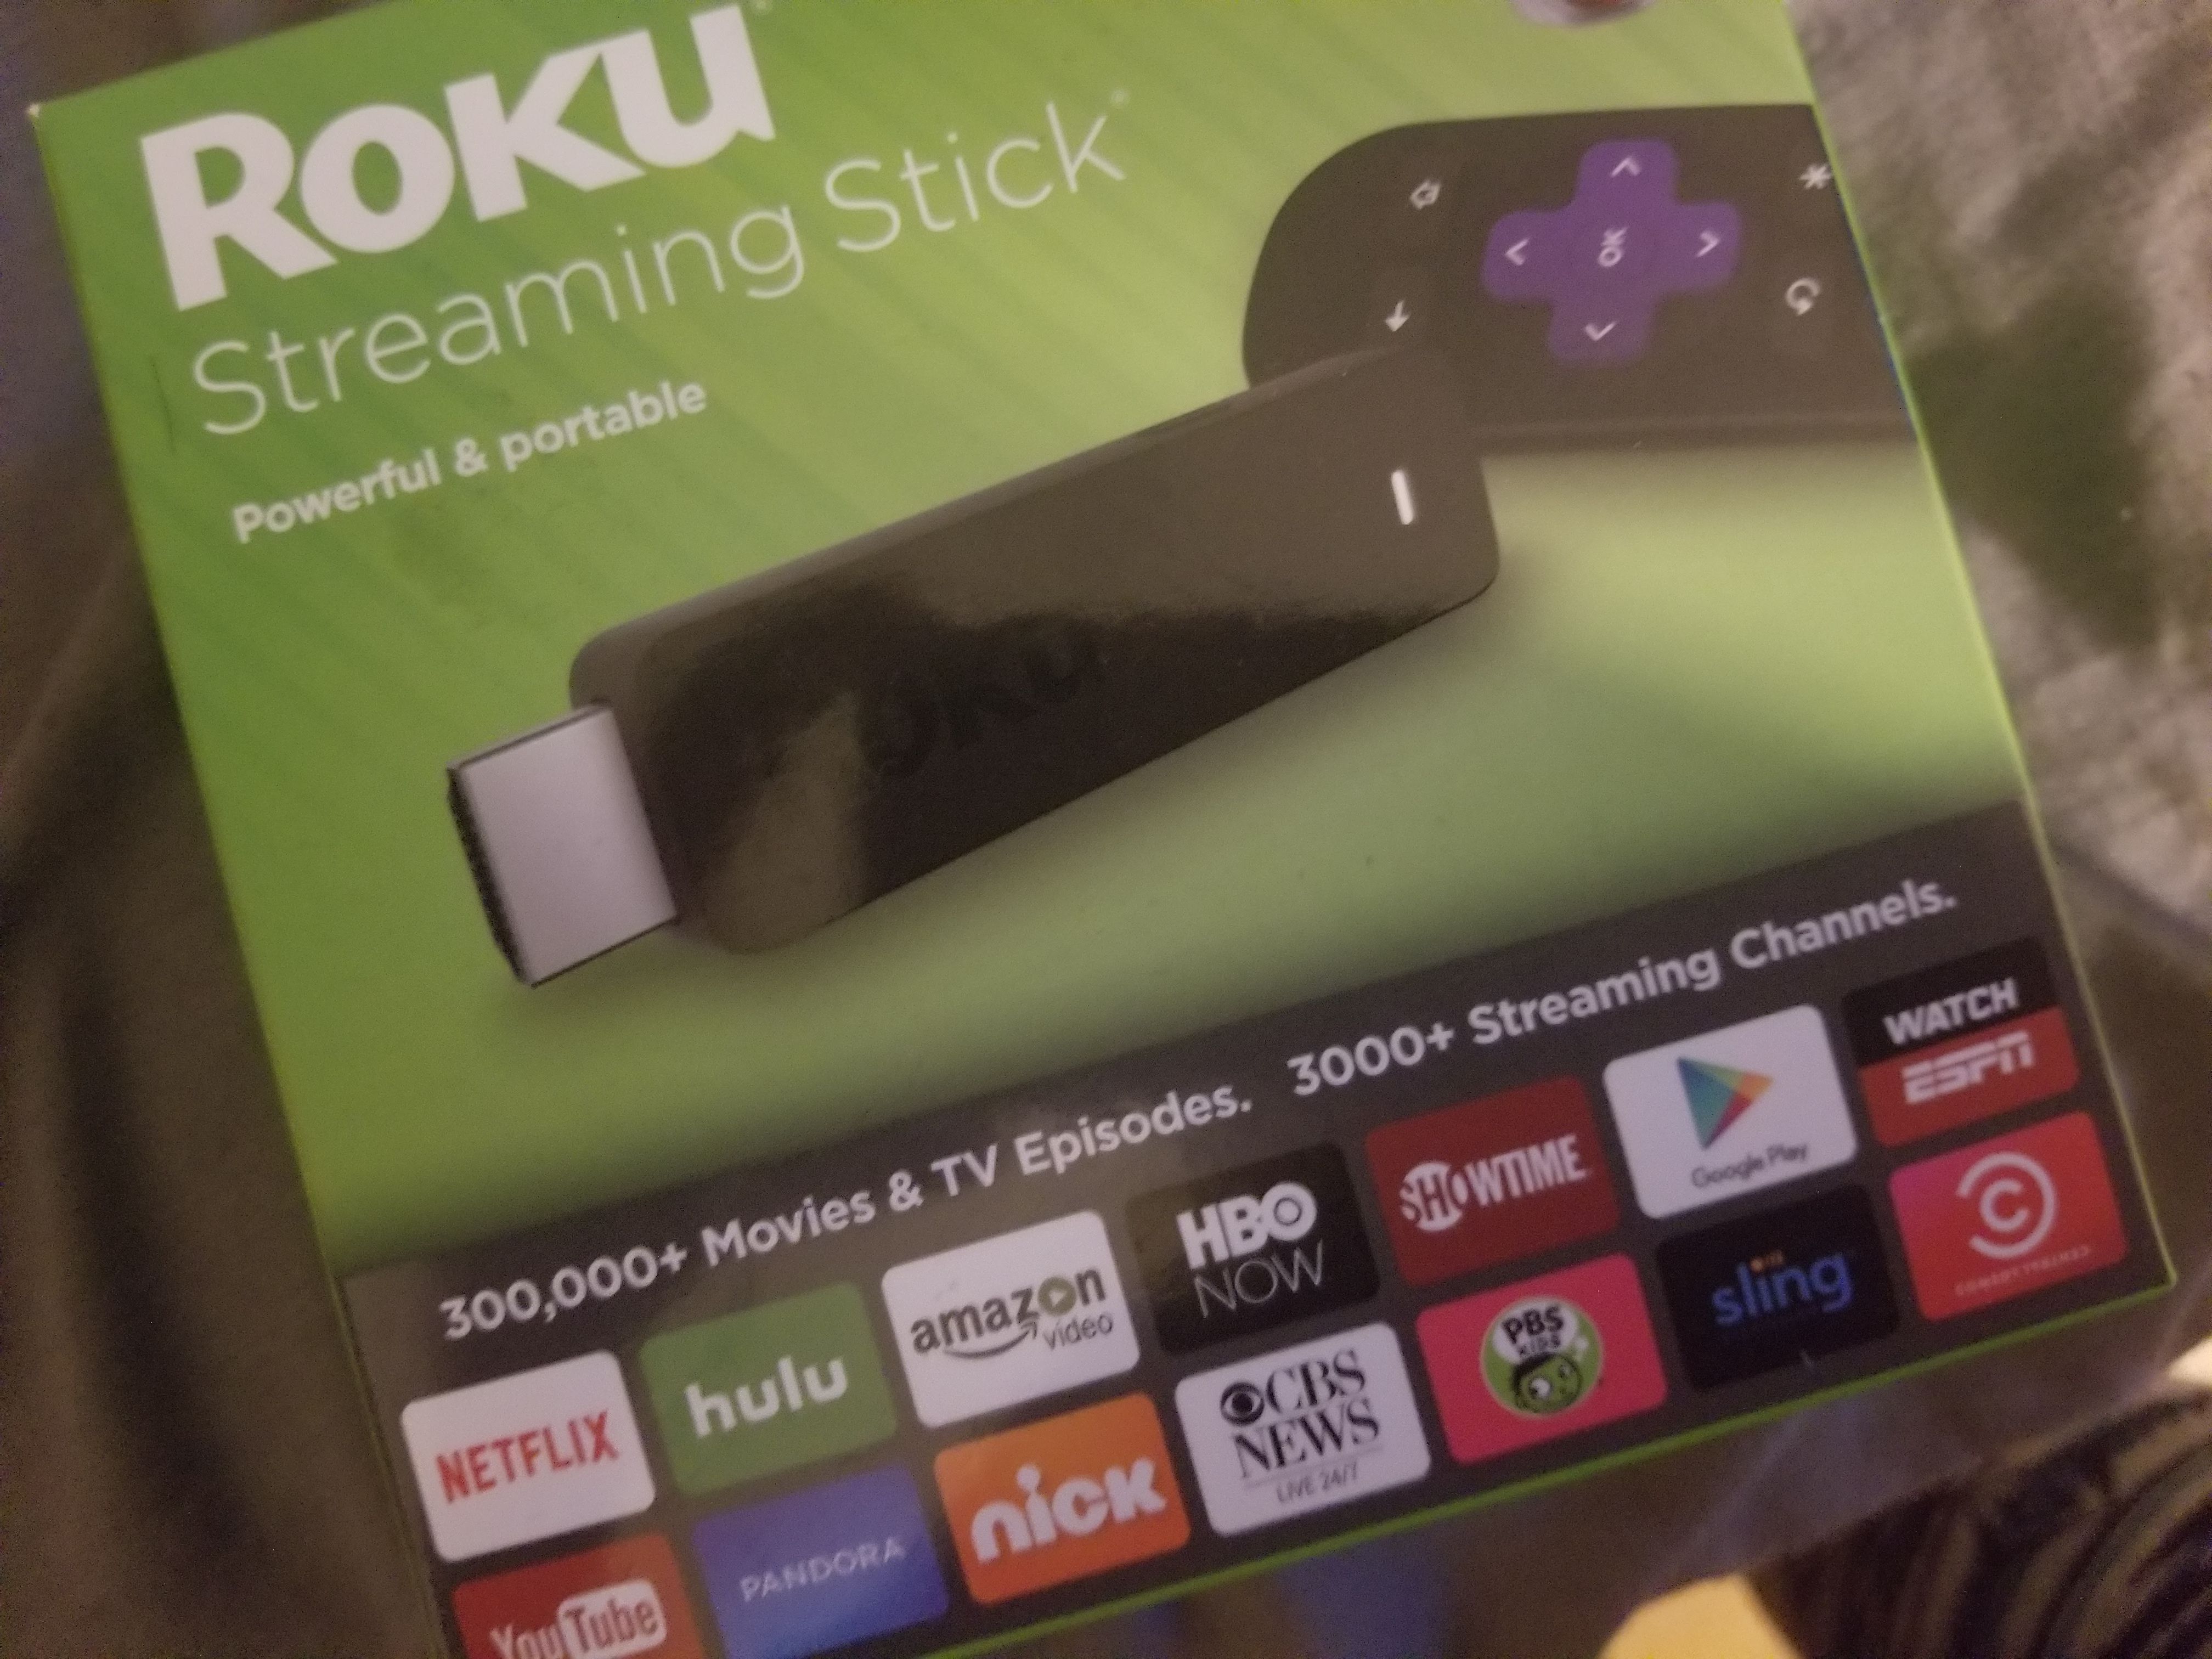 ROKU streaming stick